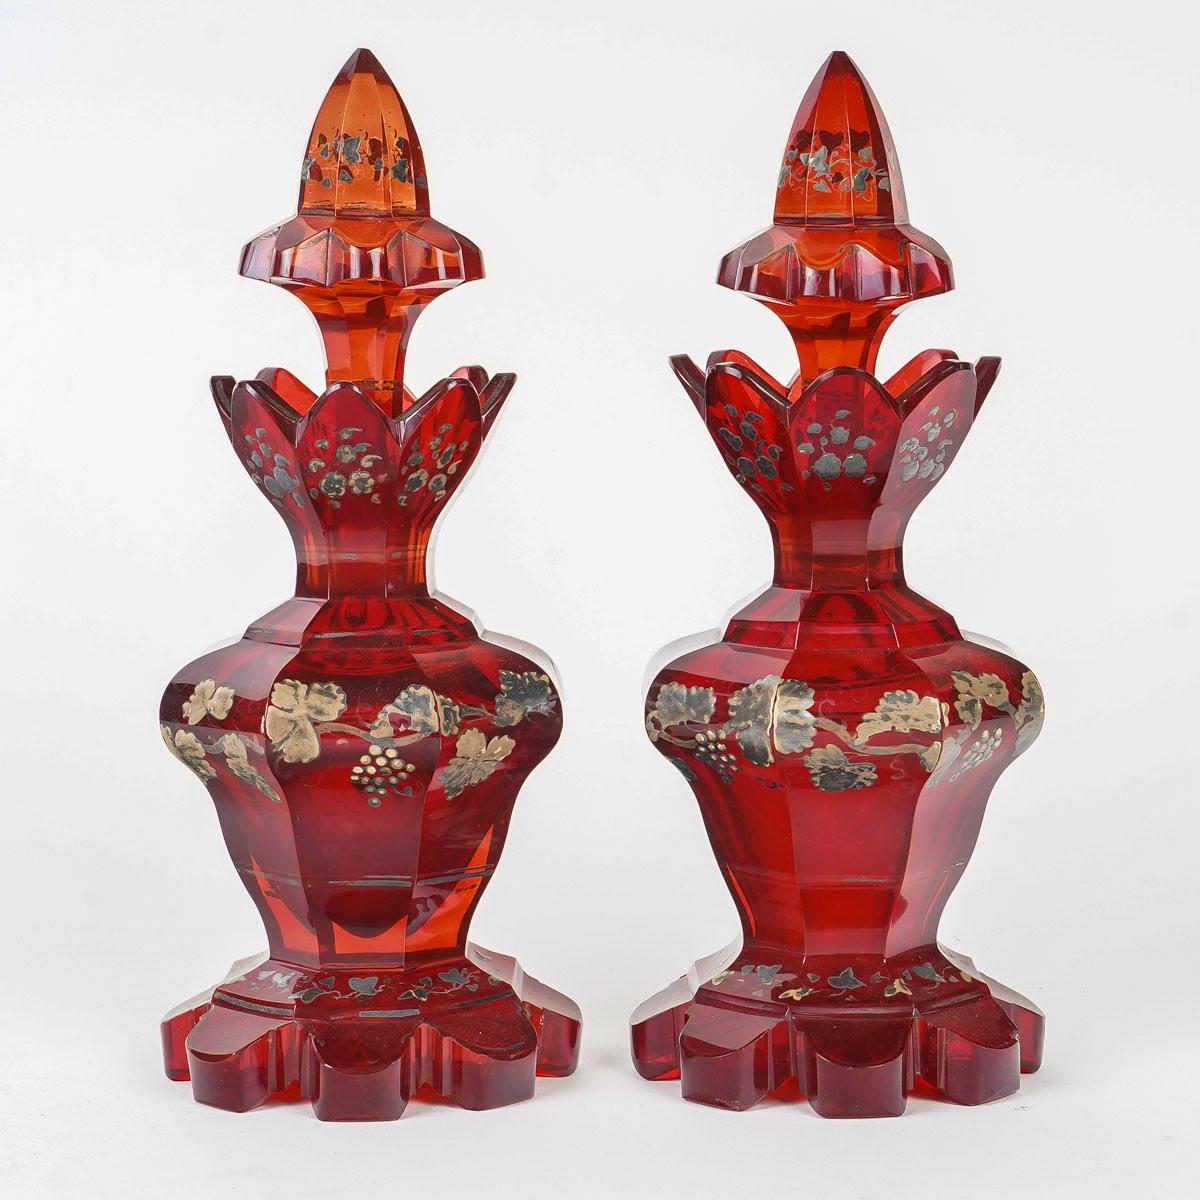 Pair of Bohemian Crystal Perfume Bottles, 19th Century, Napoleon III period.

Pair of Perfume Bottles, 19th century, Napoleon III period in red Bohemian crystal enamelled in silver.
h: 20cm, d: 8cm